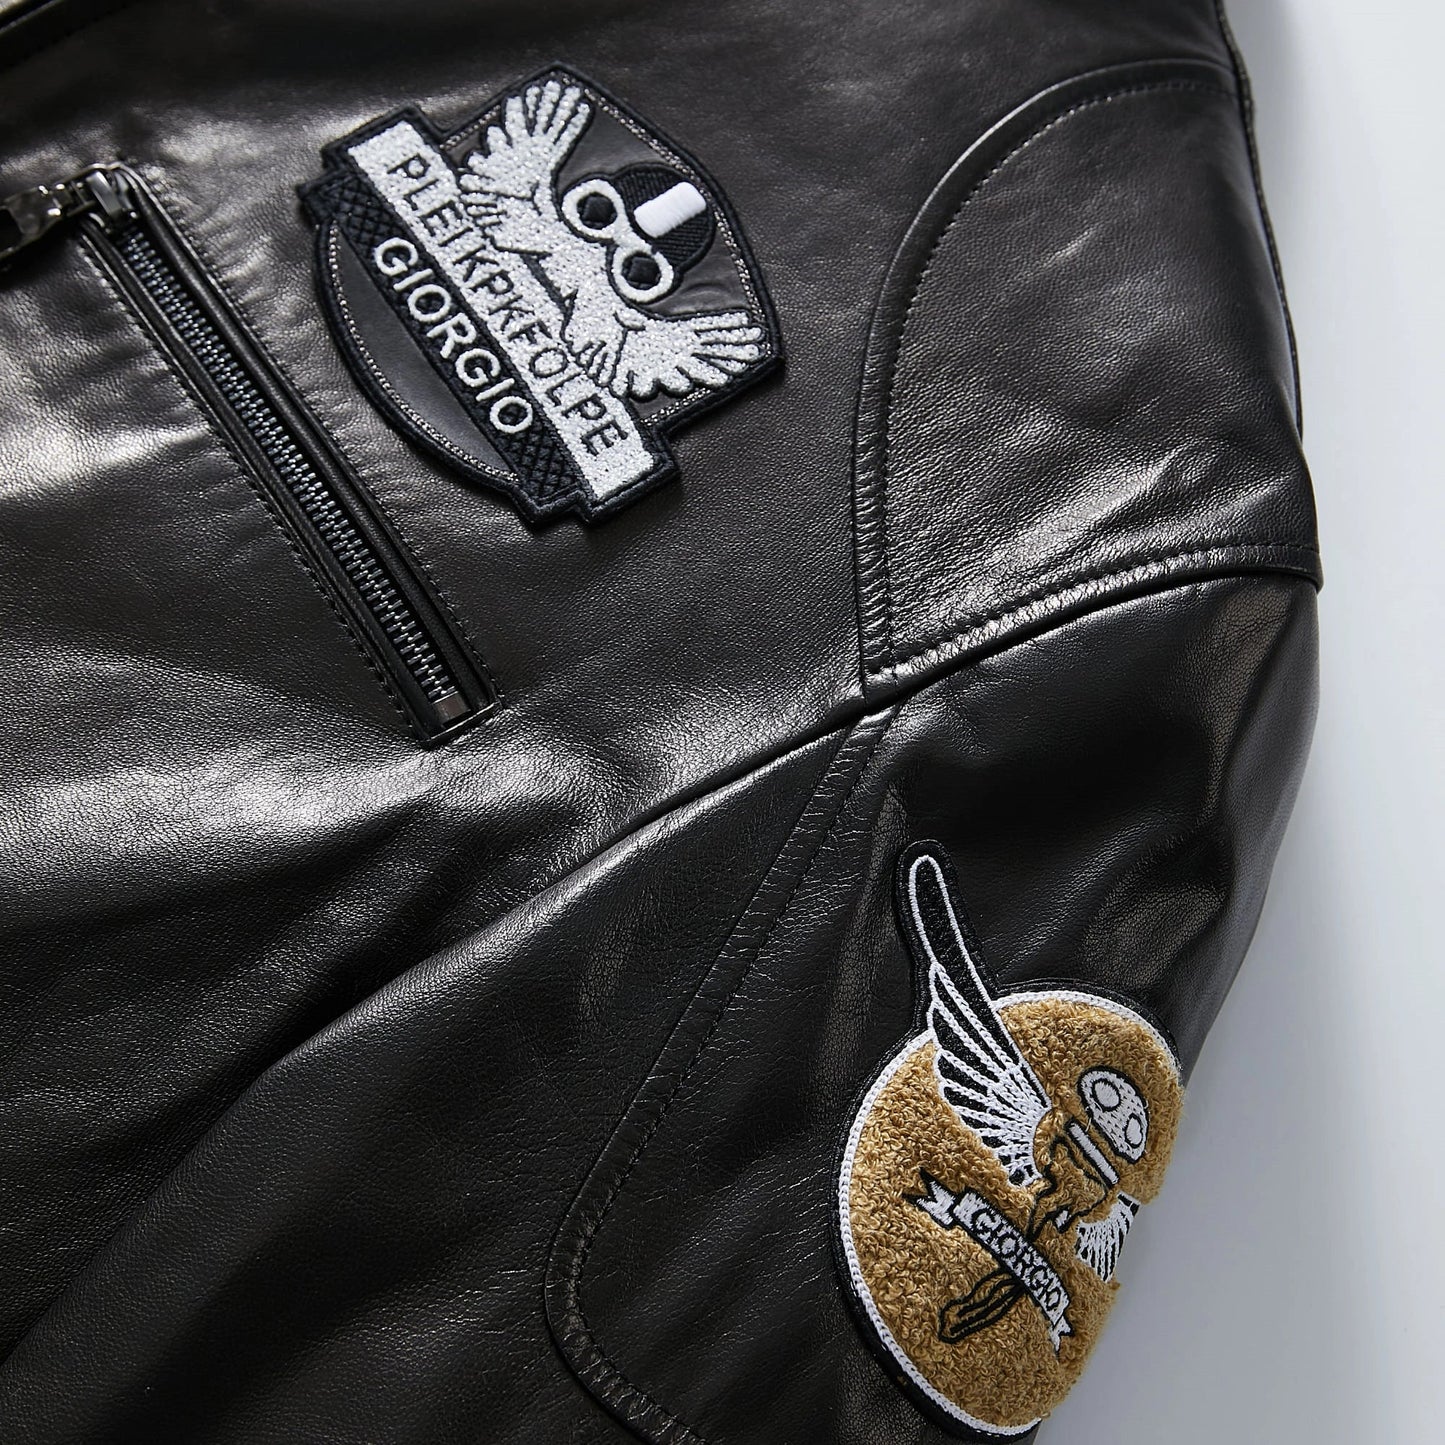 Men's Black Genuine Goatskin Leather Biker Jacket with Patches